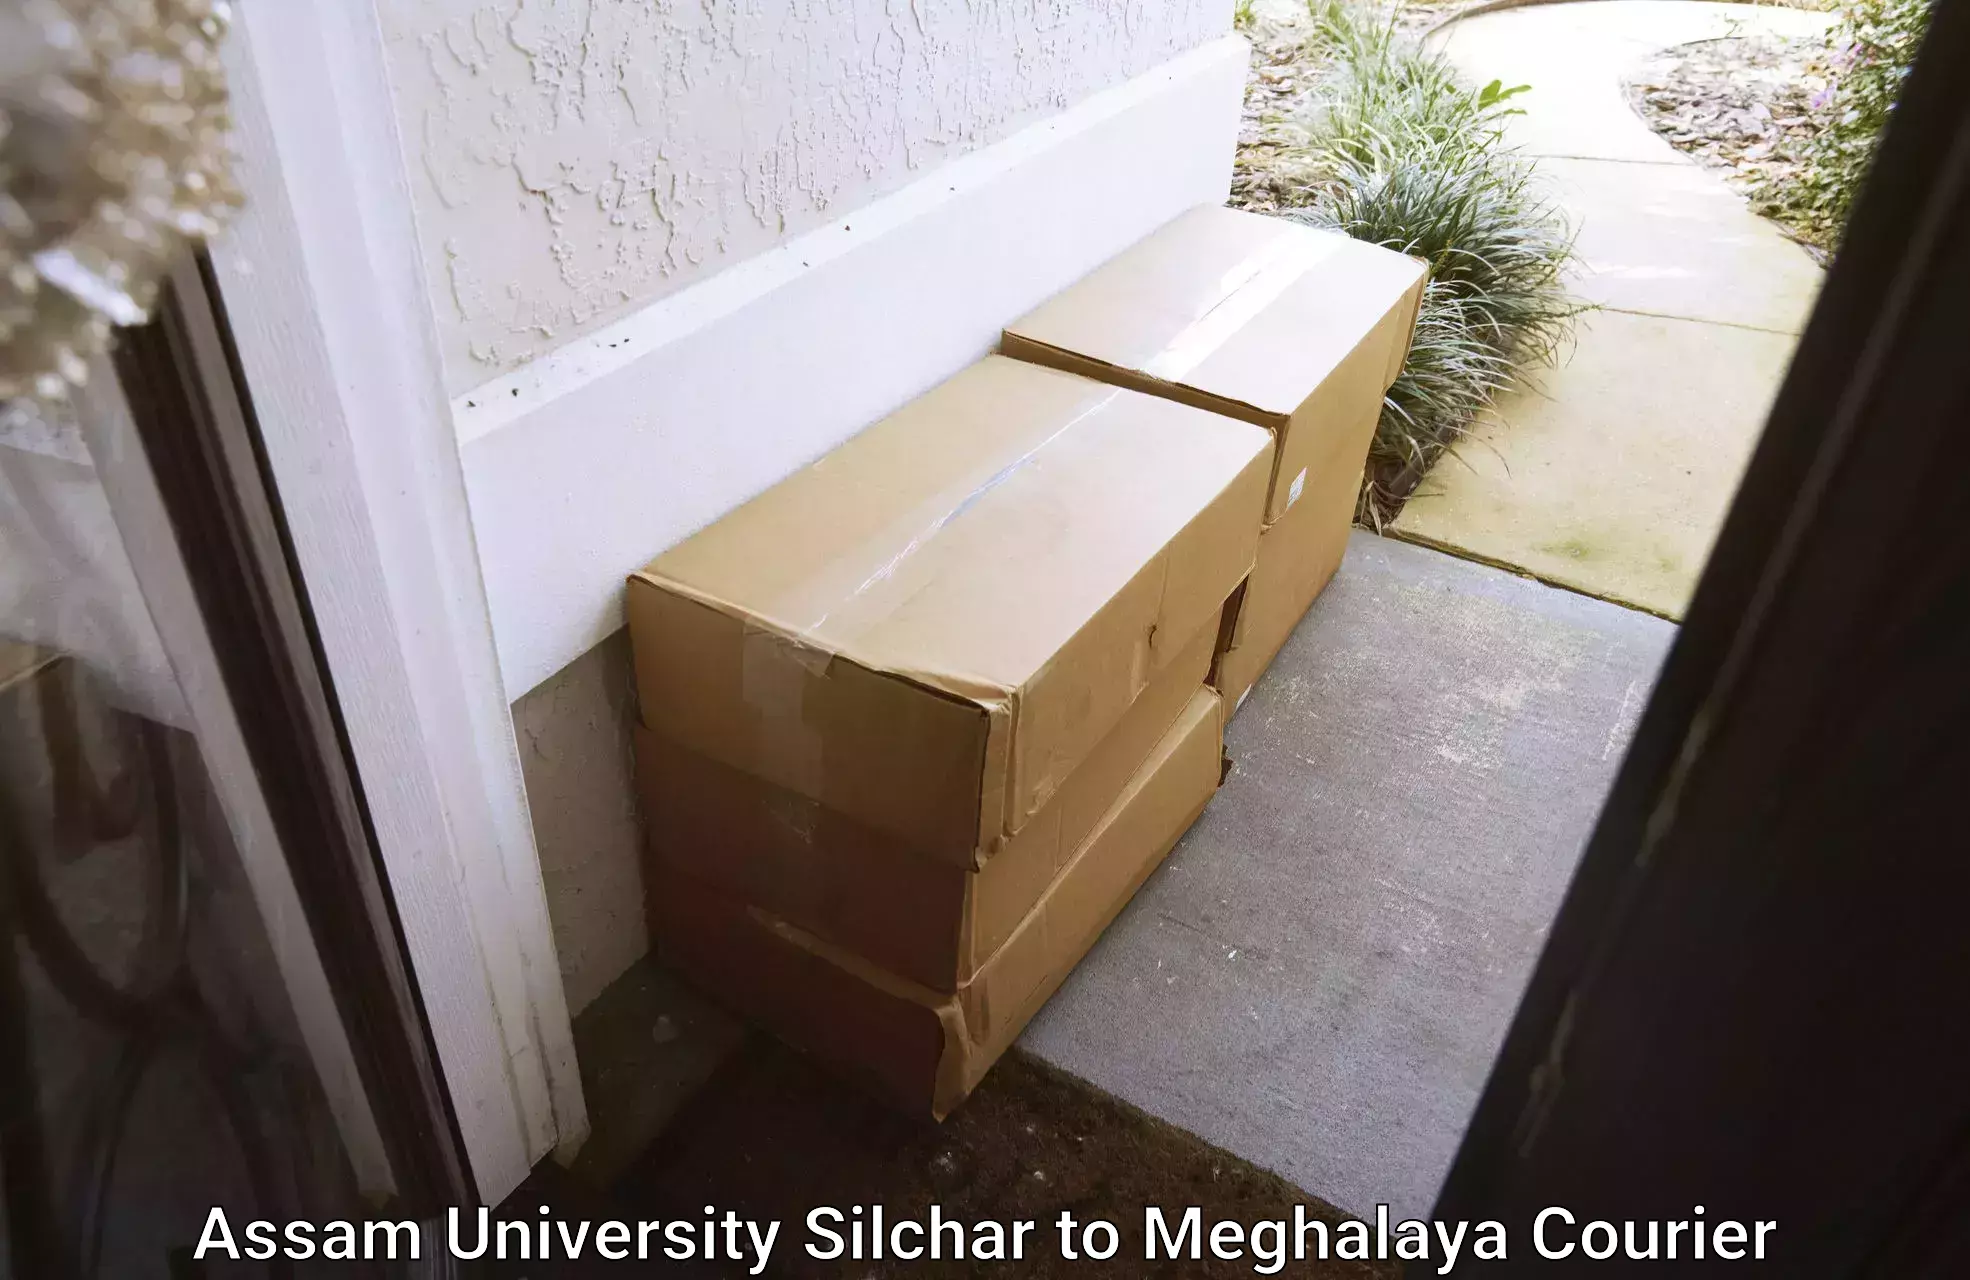 Efficient parcel service Assam University Silchar to Umsaw